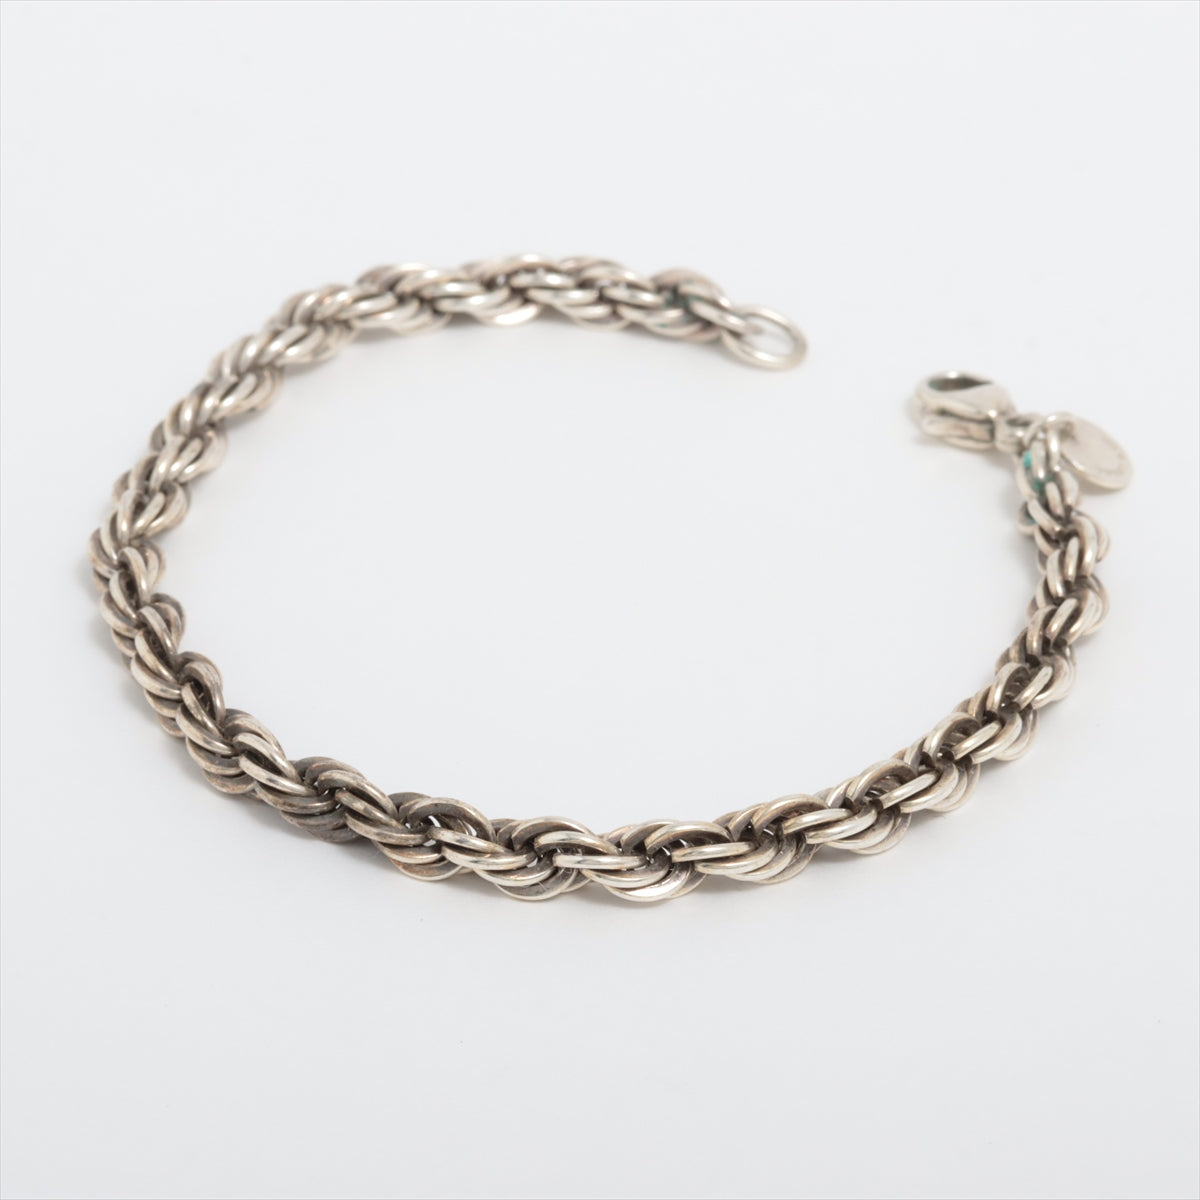 Tiffany Twist Bracelet 925 12.8g Silver